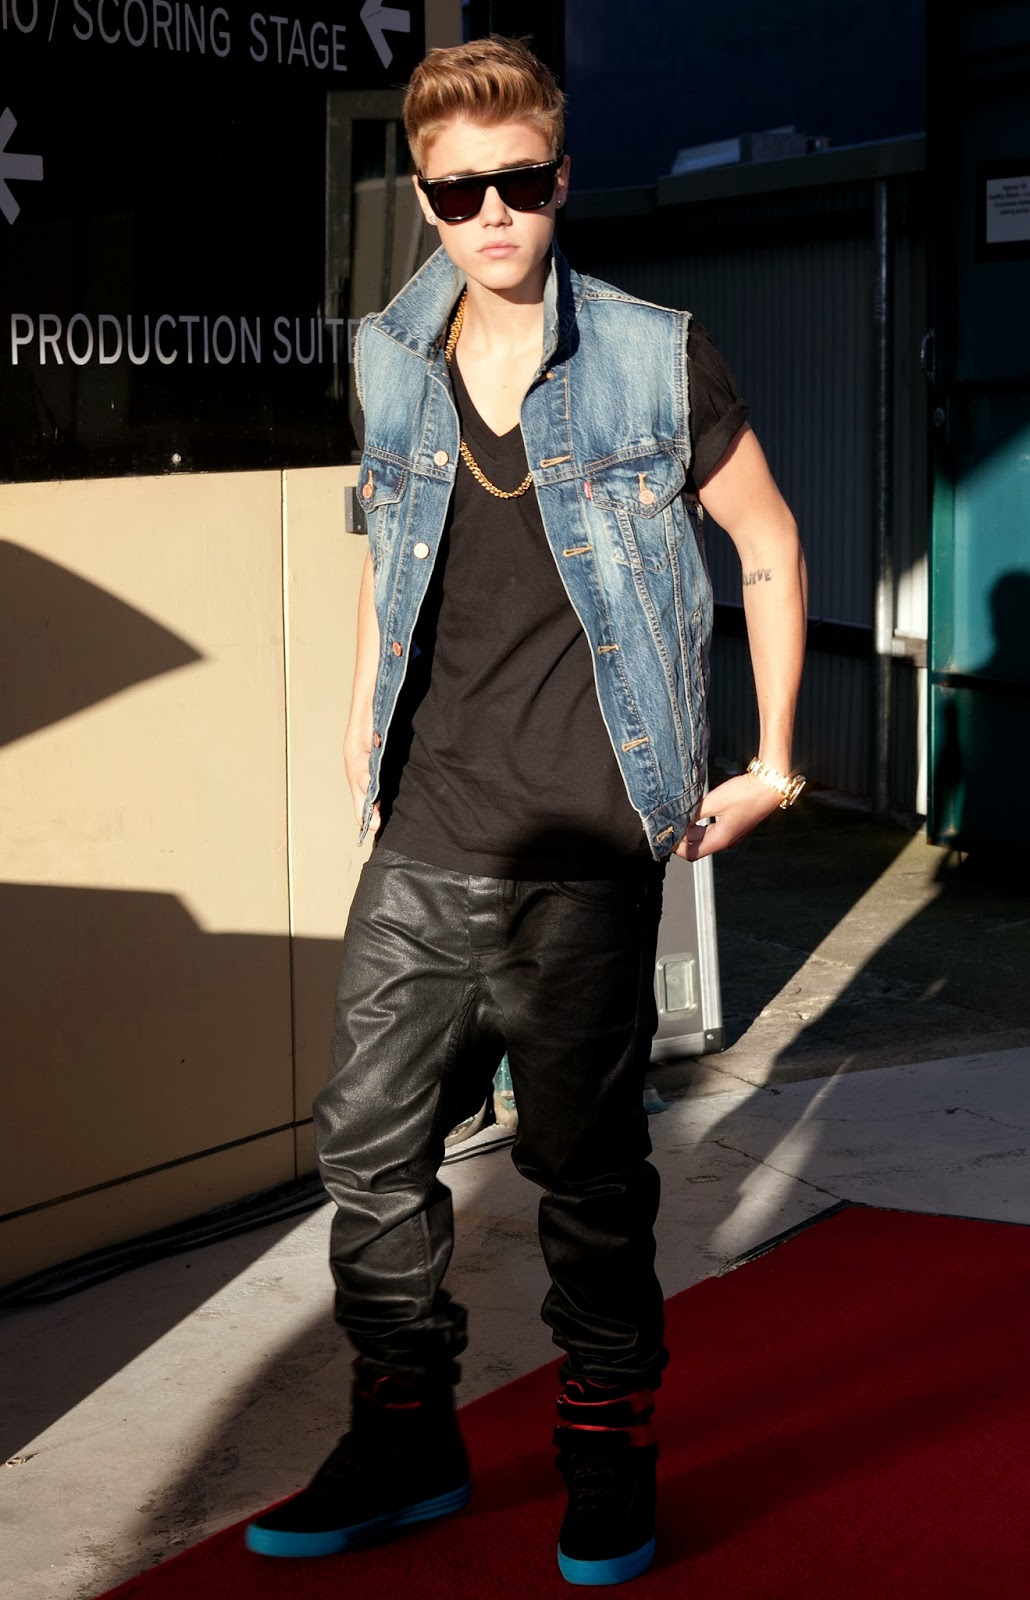 Fashion Inspiration From Justin Bieber | Bio Street